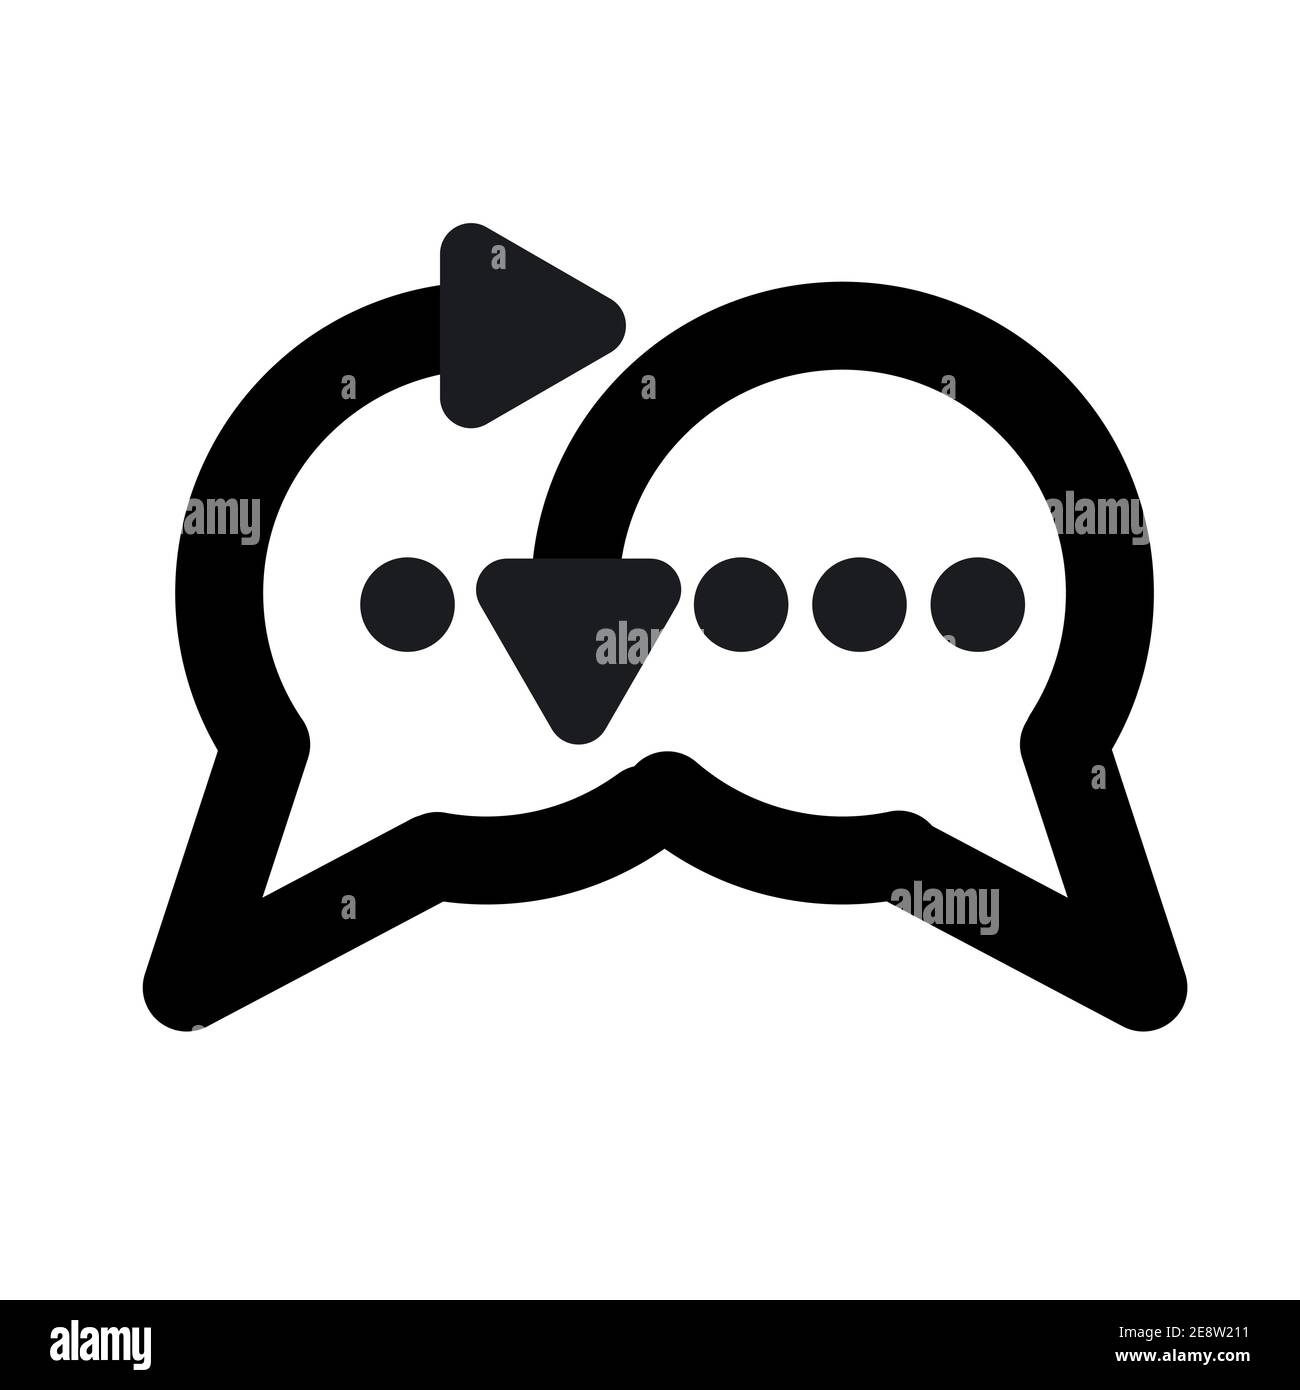 black outline illustration of a chat sign and emblem Stock Vector